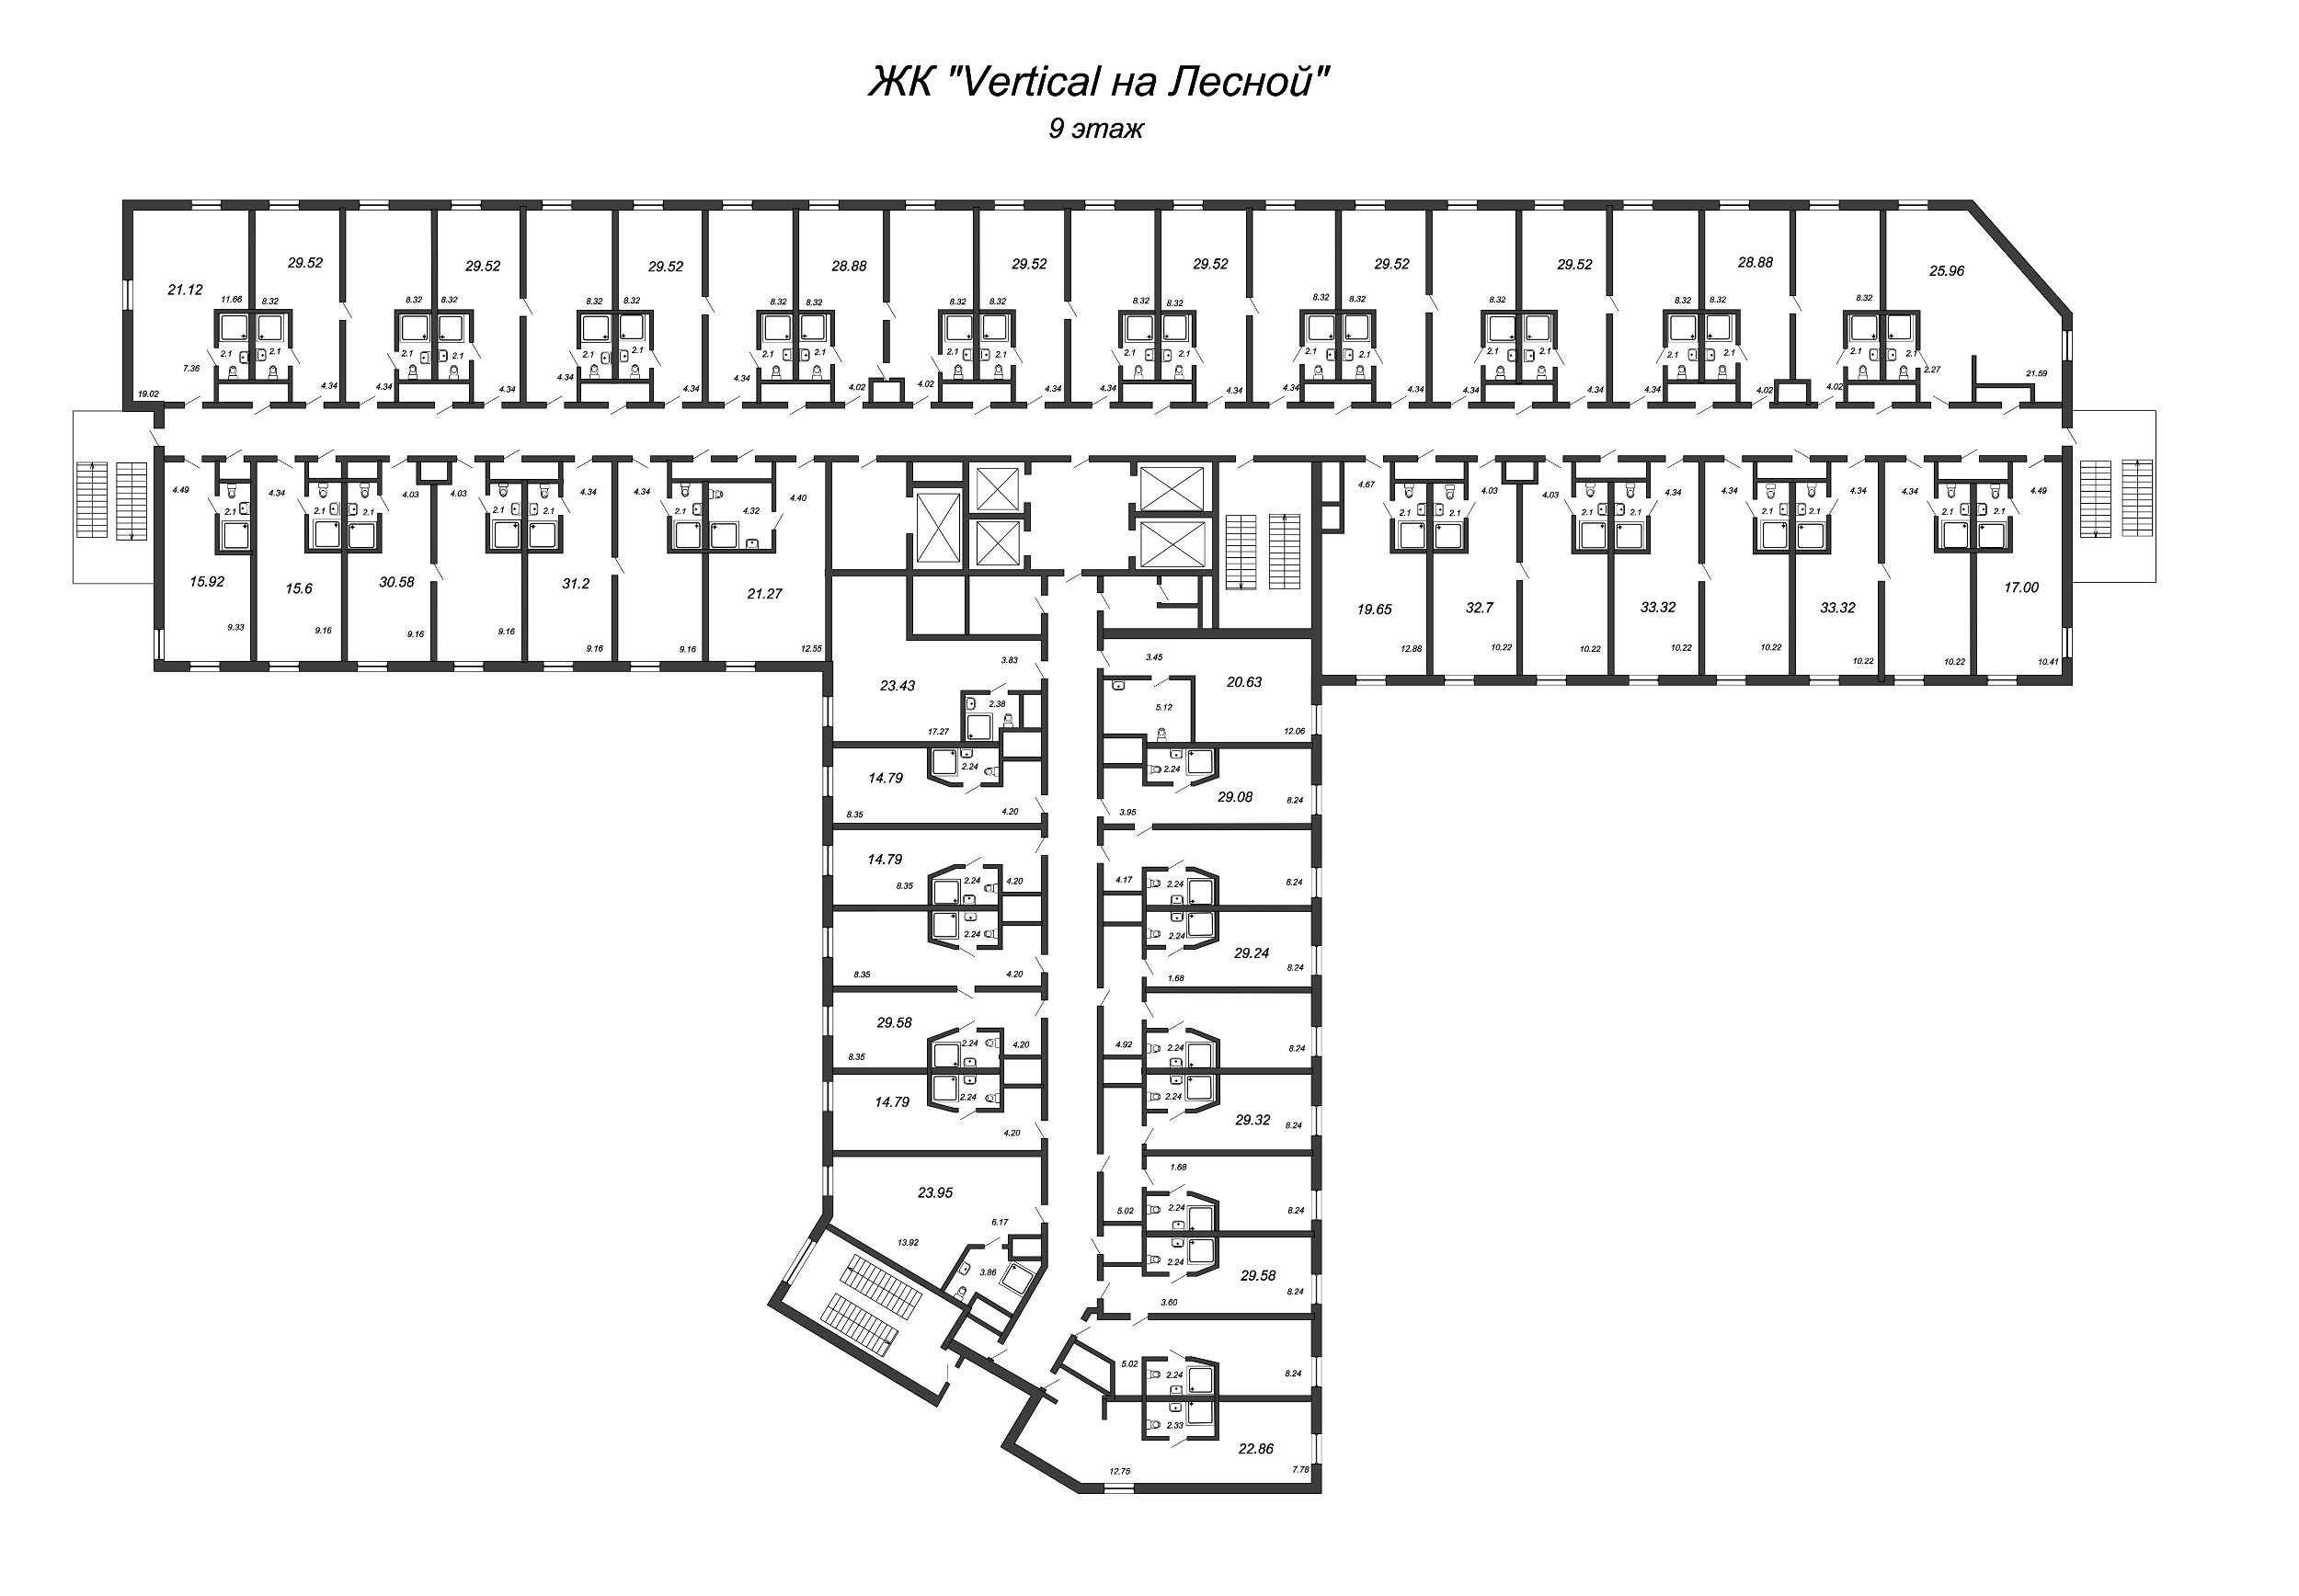 1-комнатная квартира, 29.5 м² в ЖК "Vertical We&I" - планировка этажа